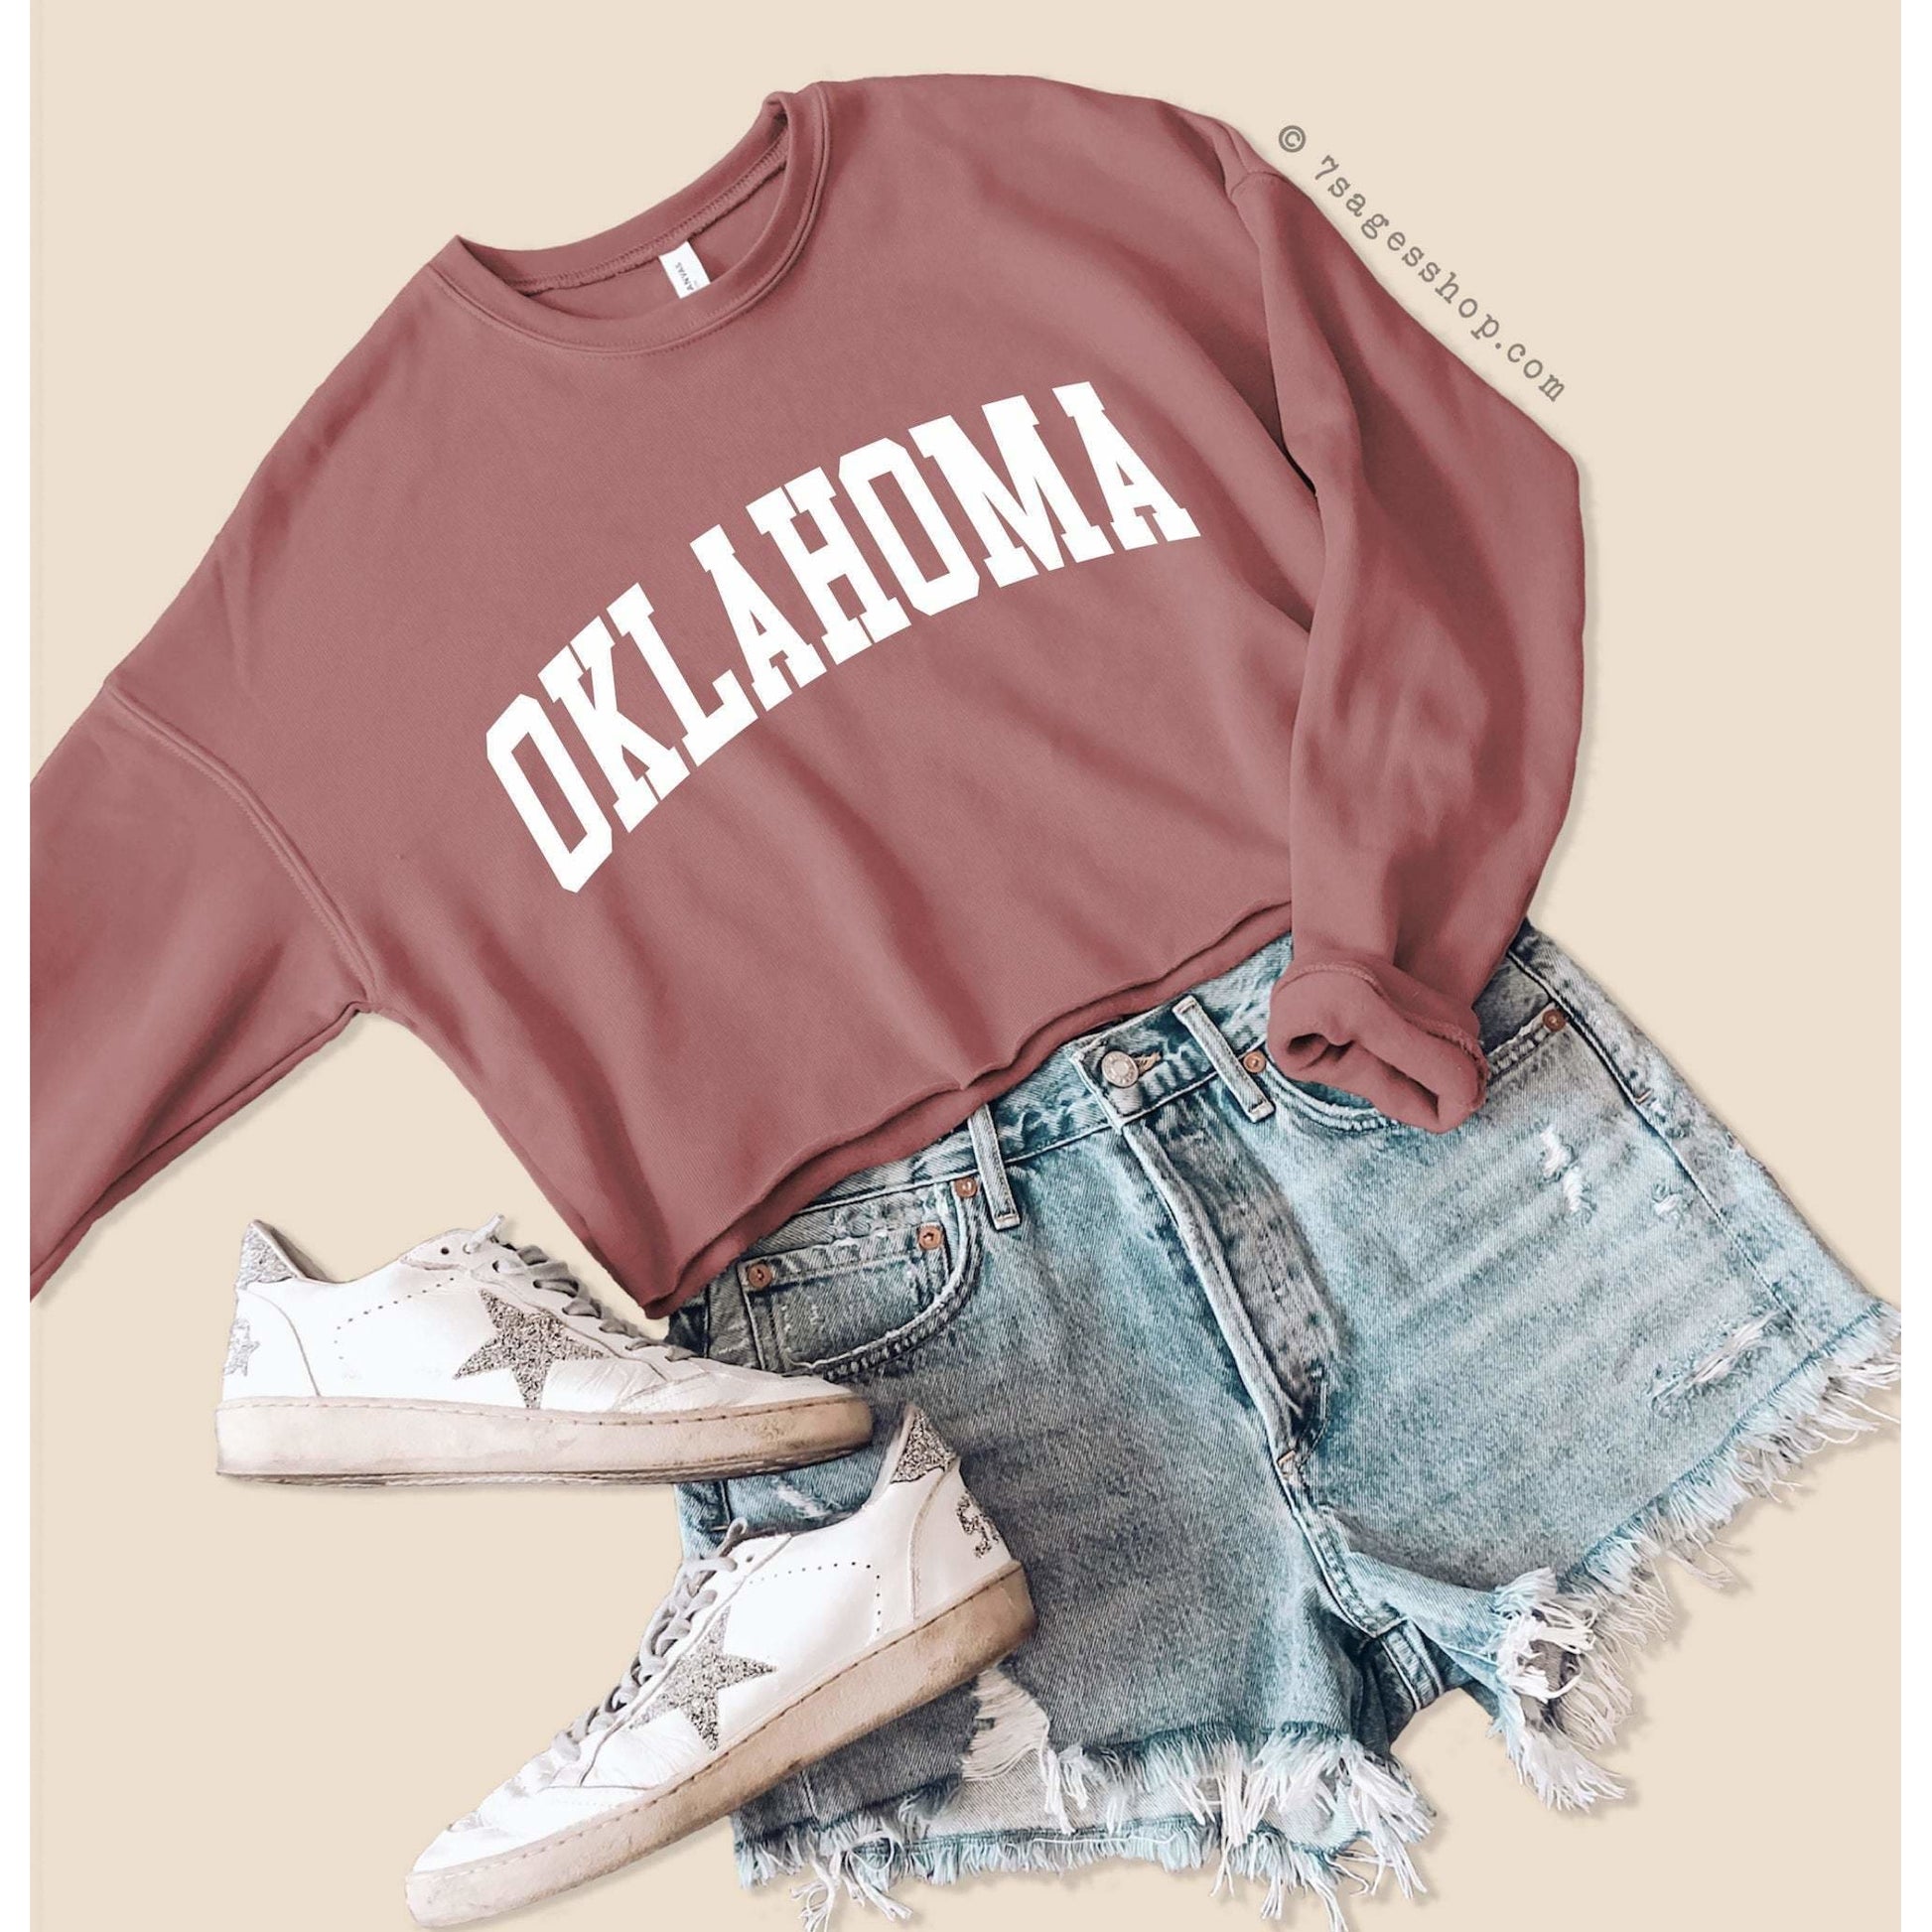 Oklahoma Cropped Sweatshirt - Oklahoma Sweatshirt - Oklahoma Shirts - Oklahoma Crewneck - Fleece Sweatshirt